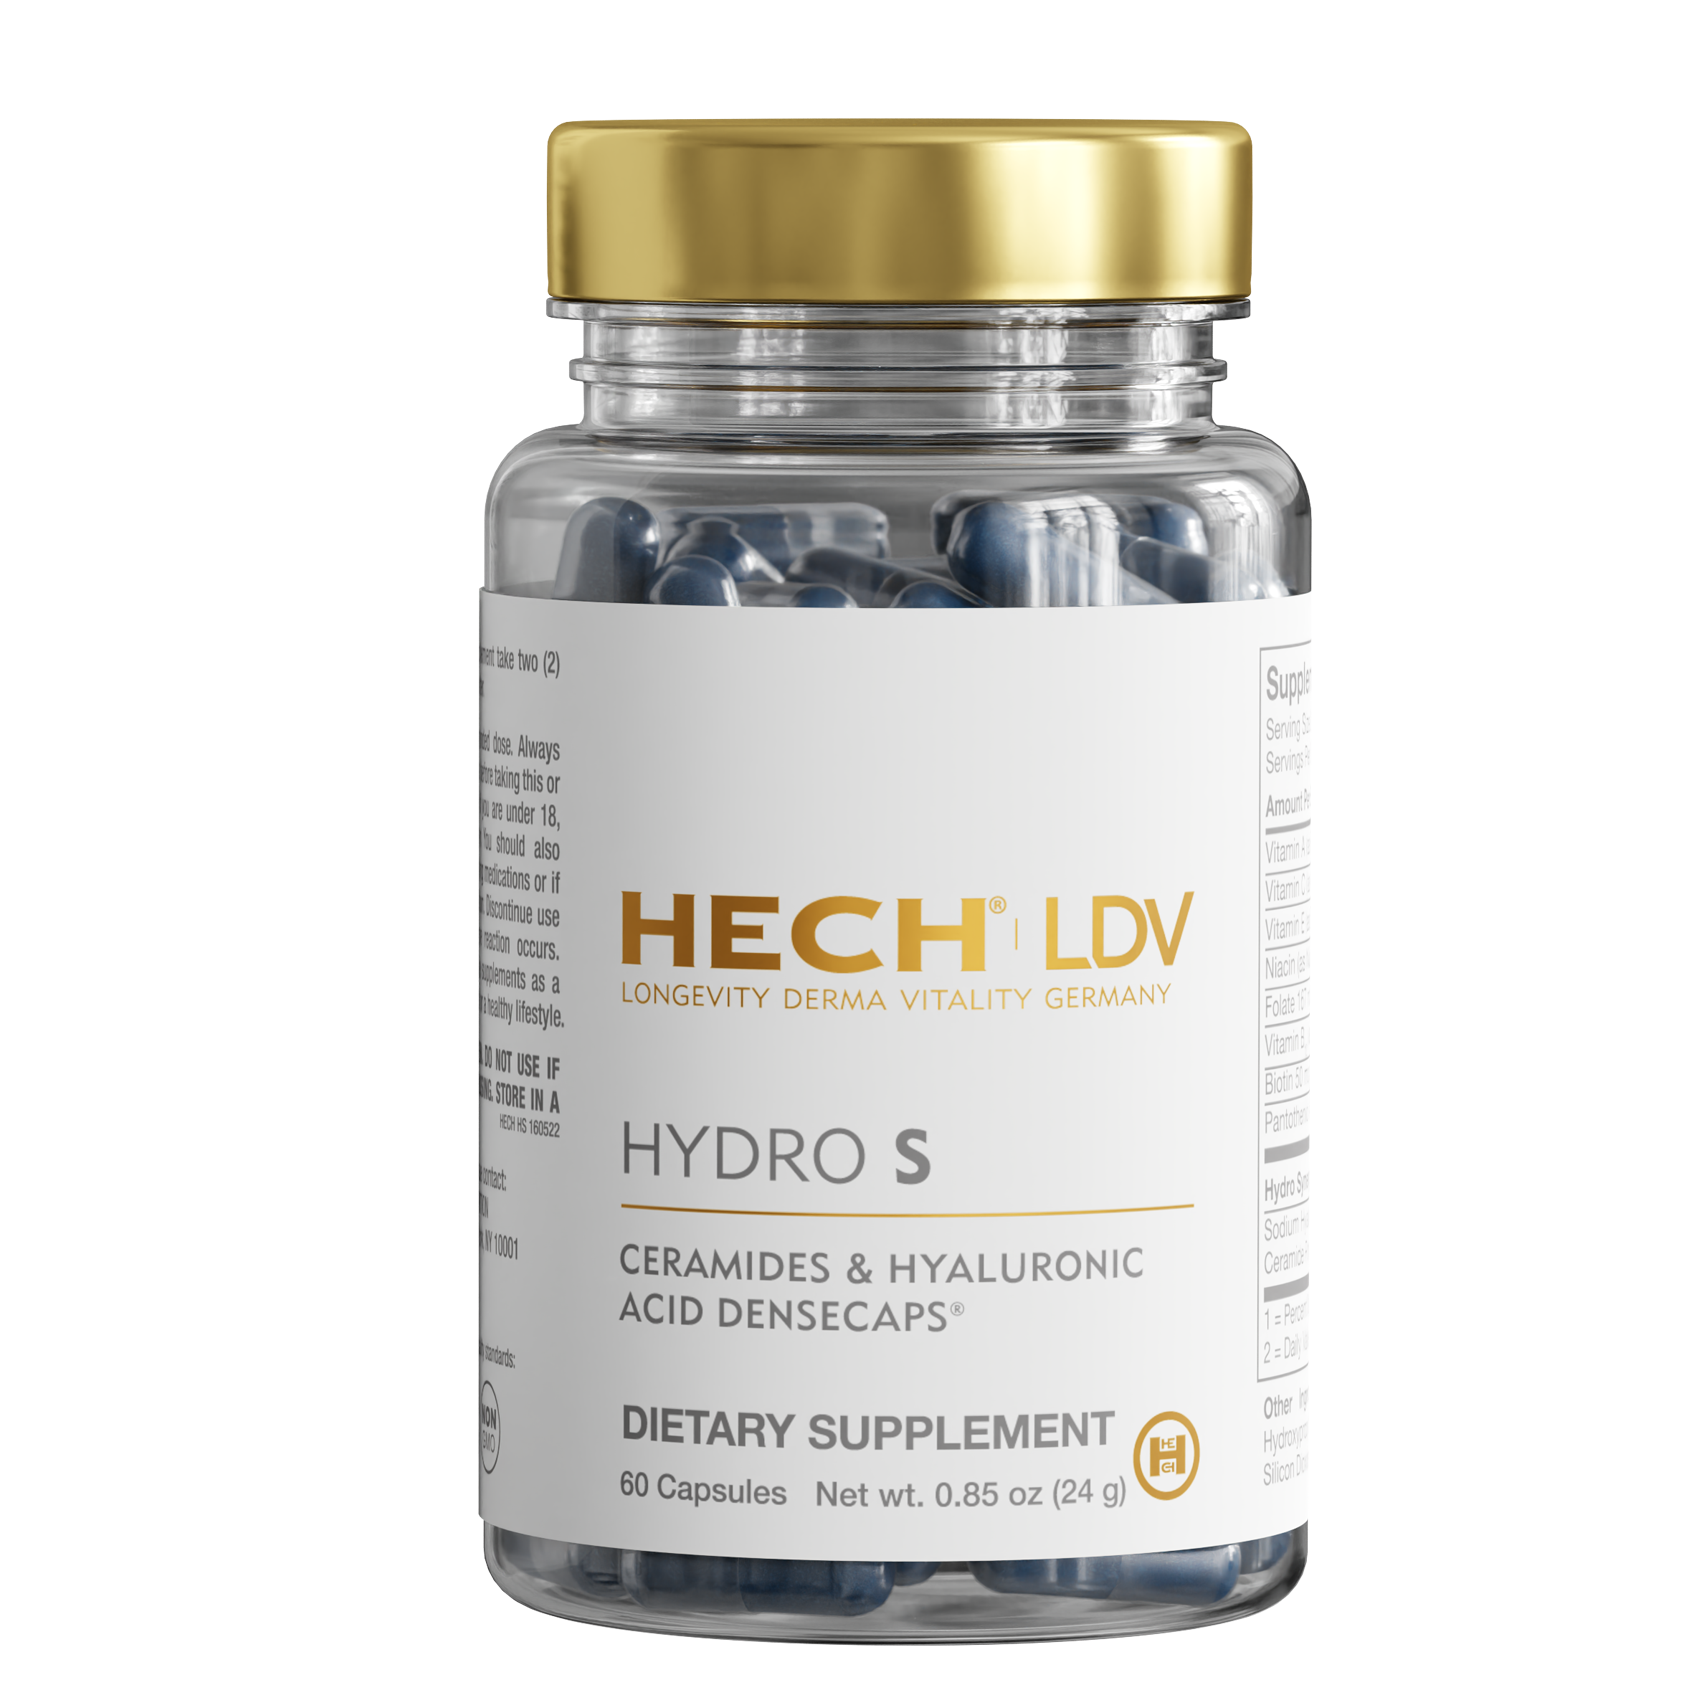 HECH LDV Hydro S product